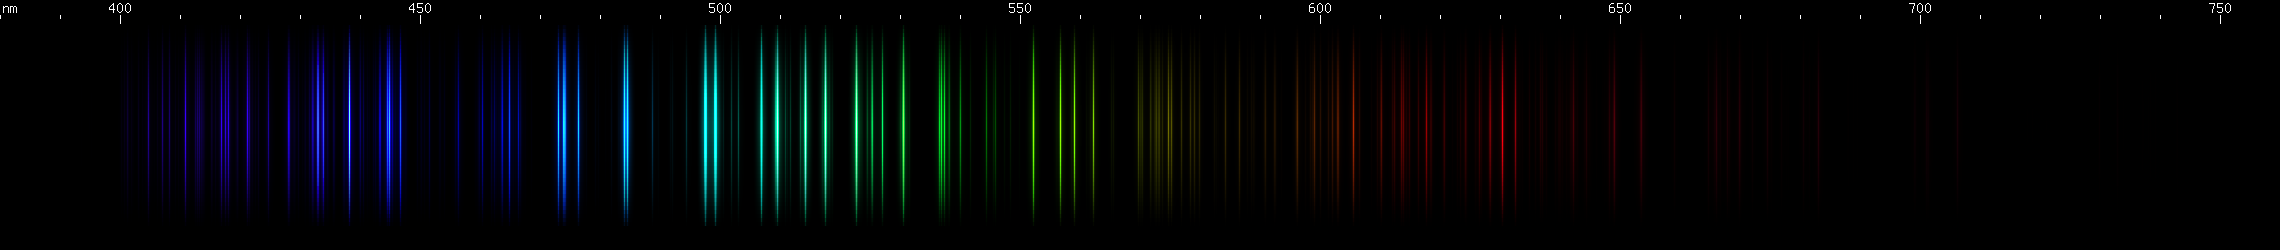 Spectral Lines of Selenium